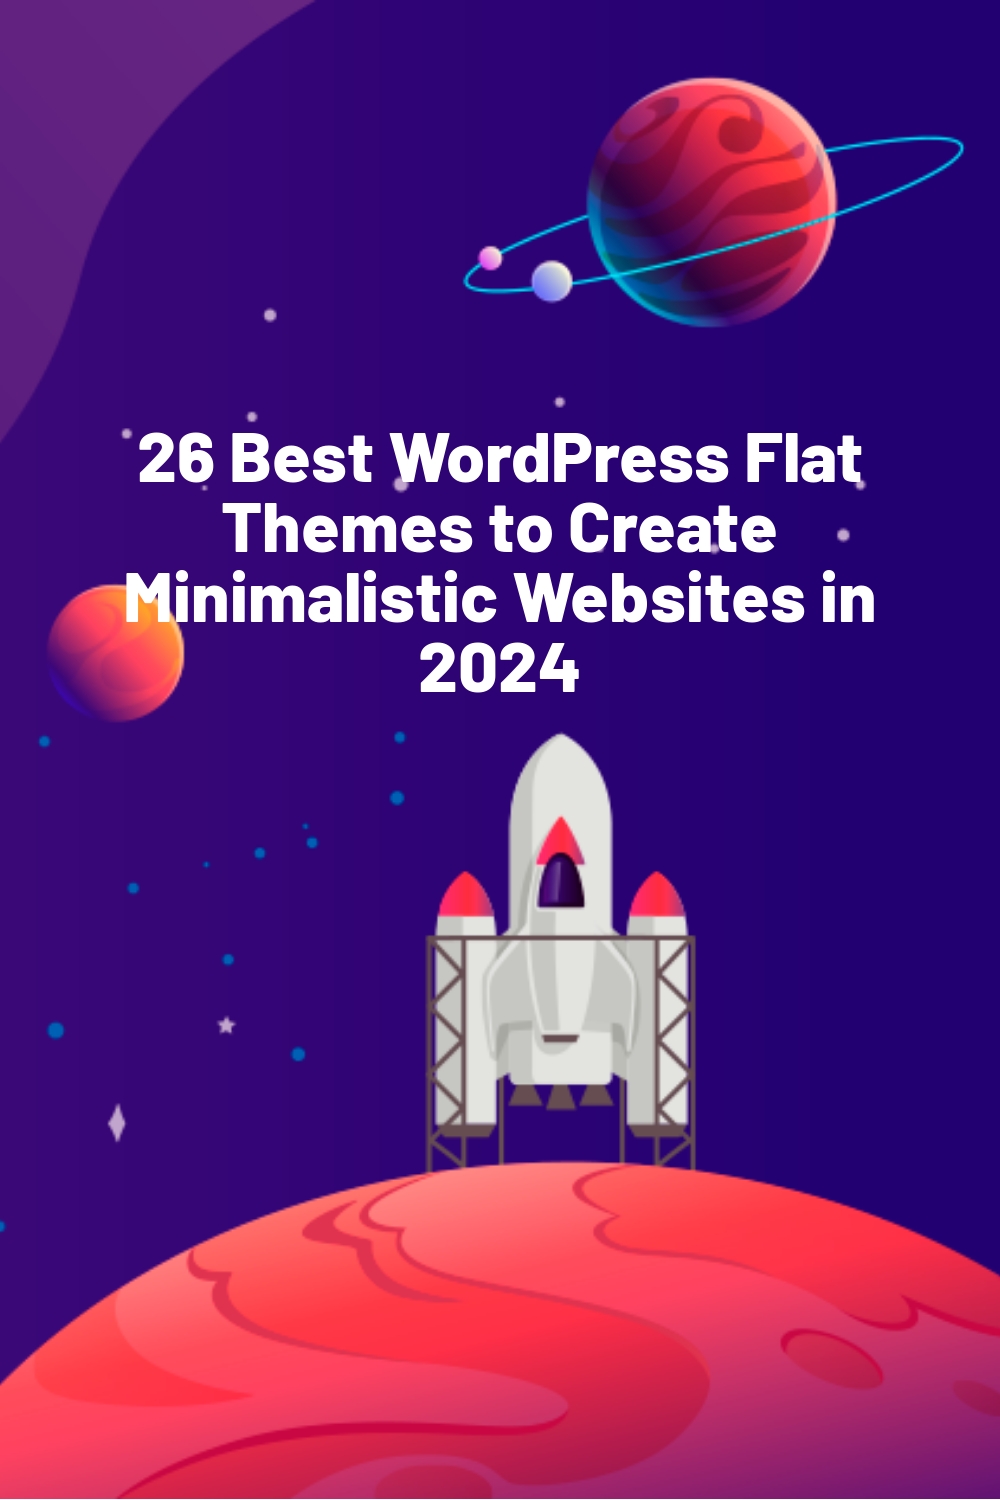 26 Best WordPress Flat Themes to Create Minimalistic Websites in 2024